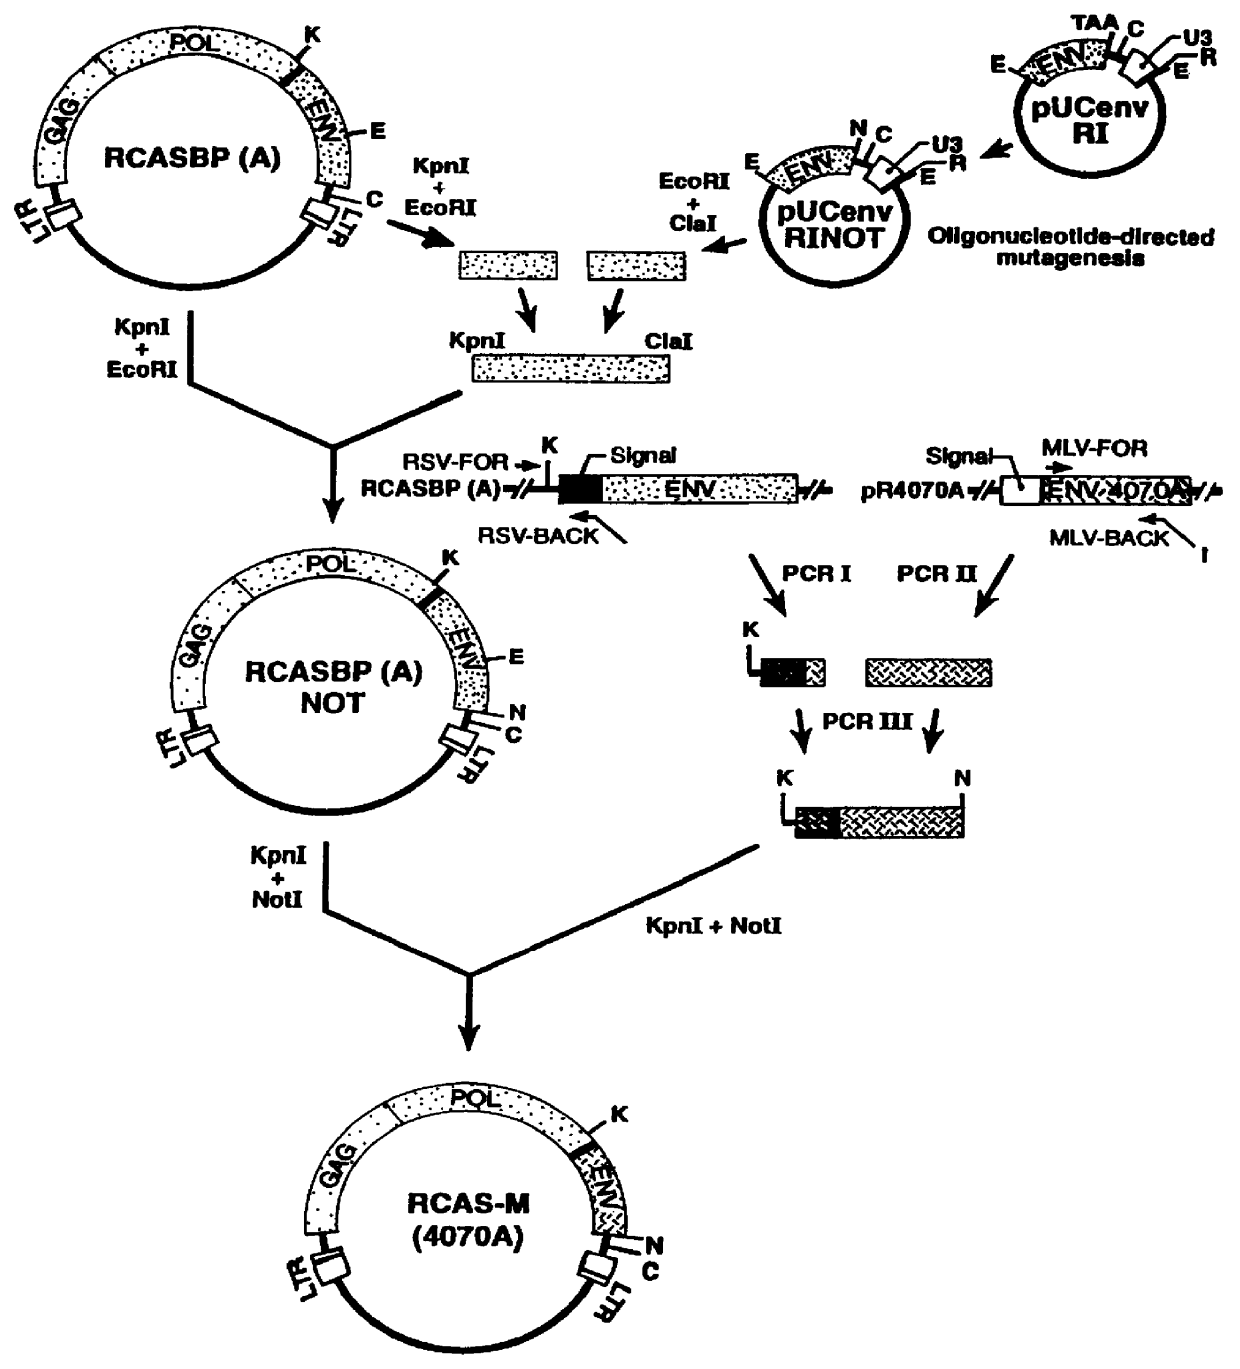 Retrovirus vectors derived from avian sarcoma leukosis viruses permitting transfer of genes into mammalian cells